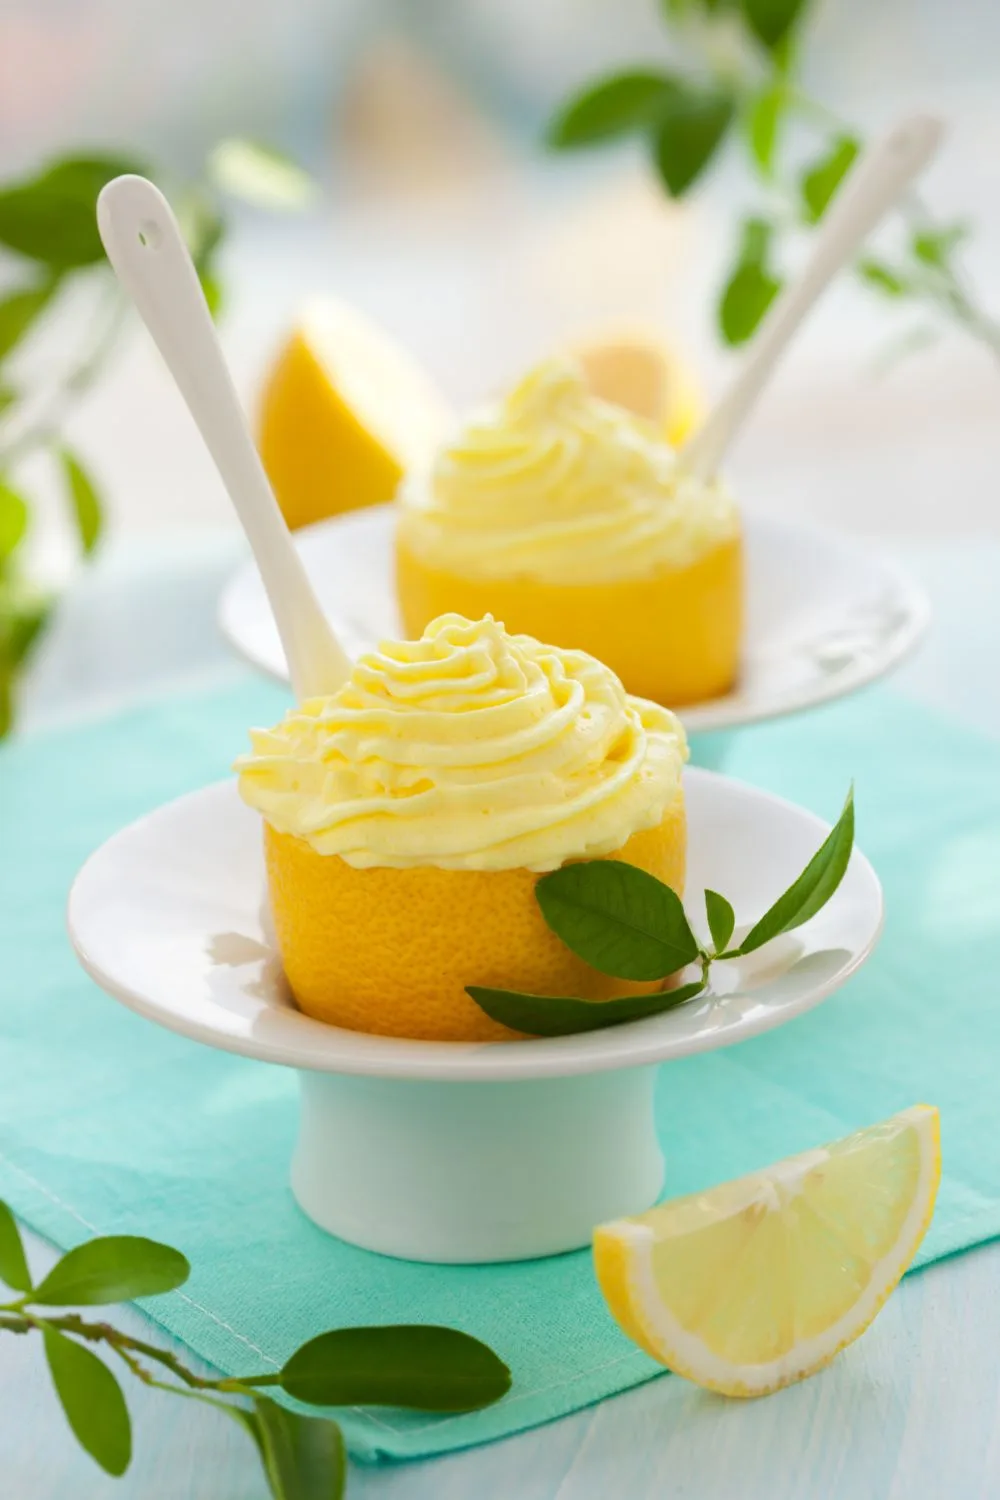 lemons on dessert plates on a teal background